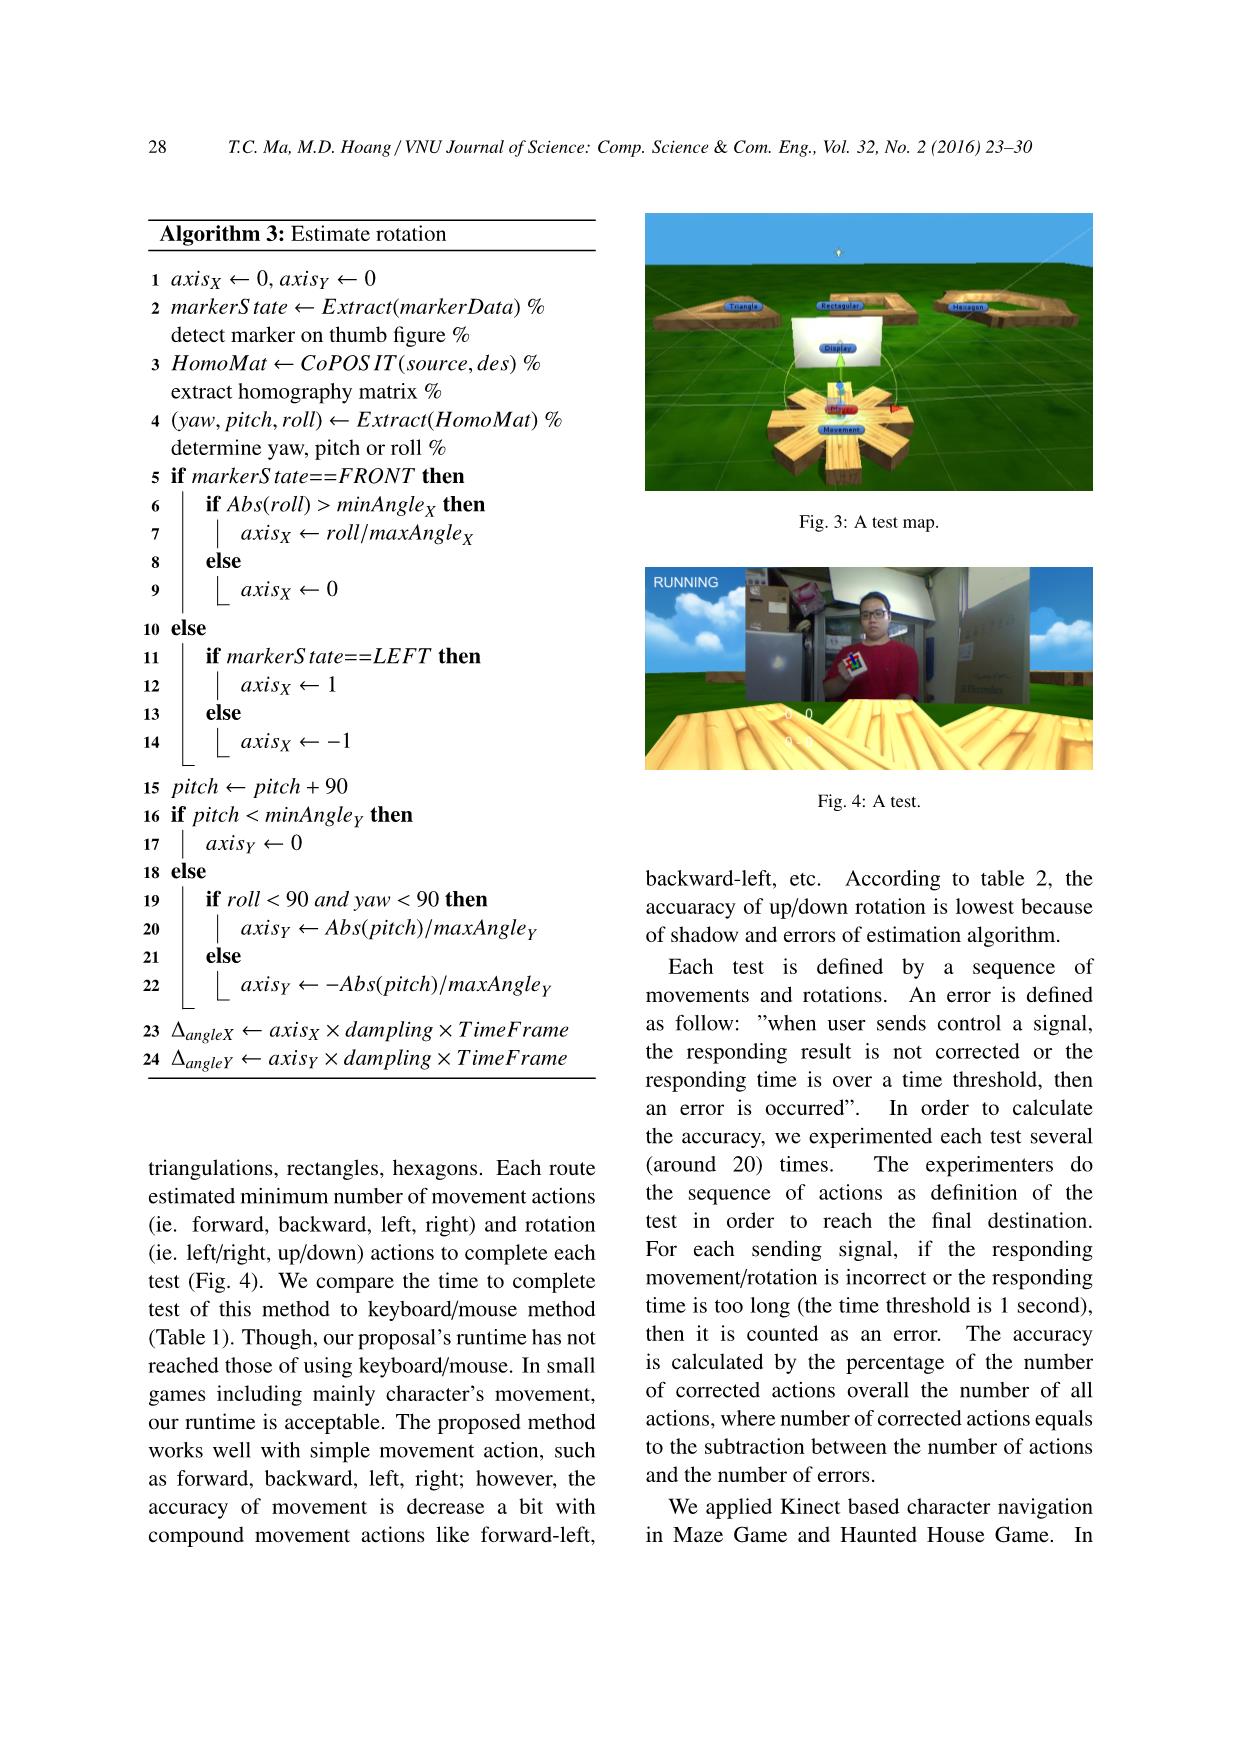 Kinect based character navigation in VR game trang 6